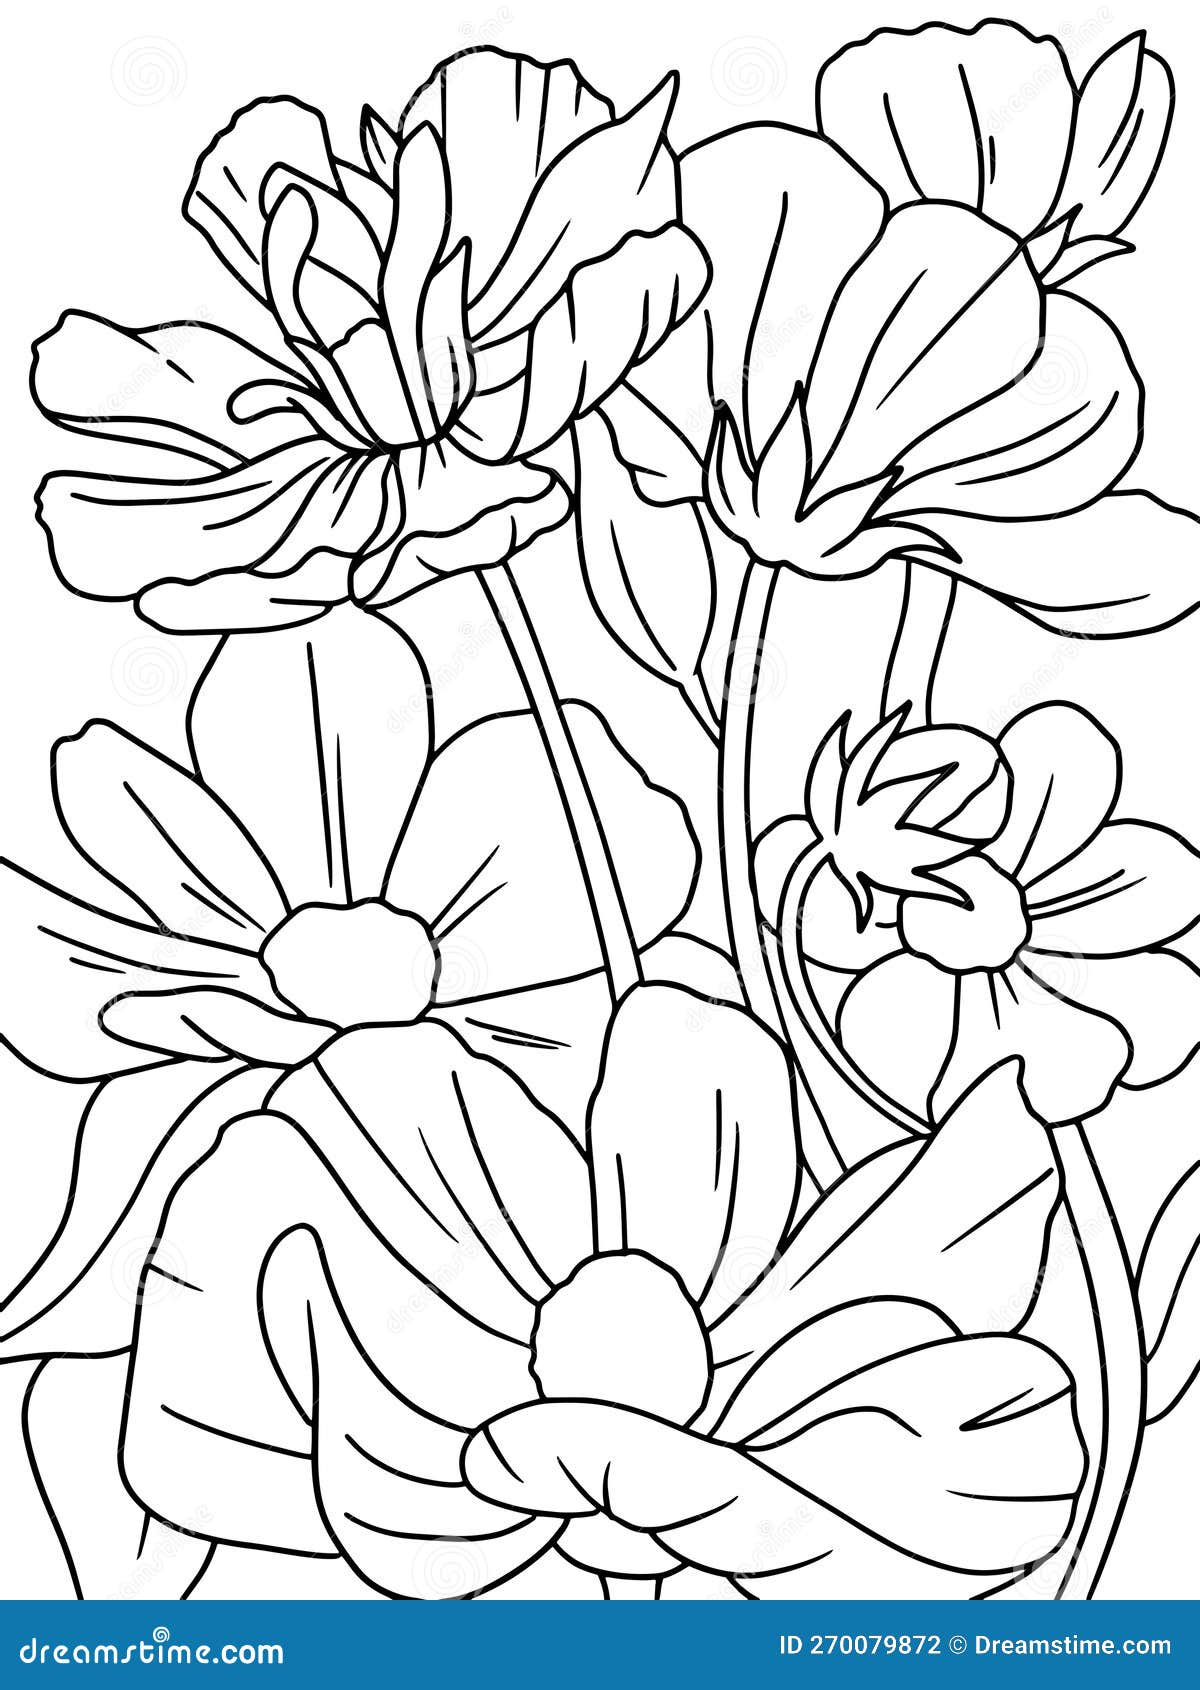 Decorative Flower Papaver Coloring Page with Pencil Line Art. Black ...